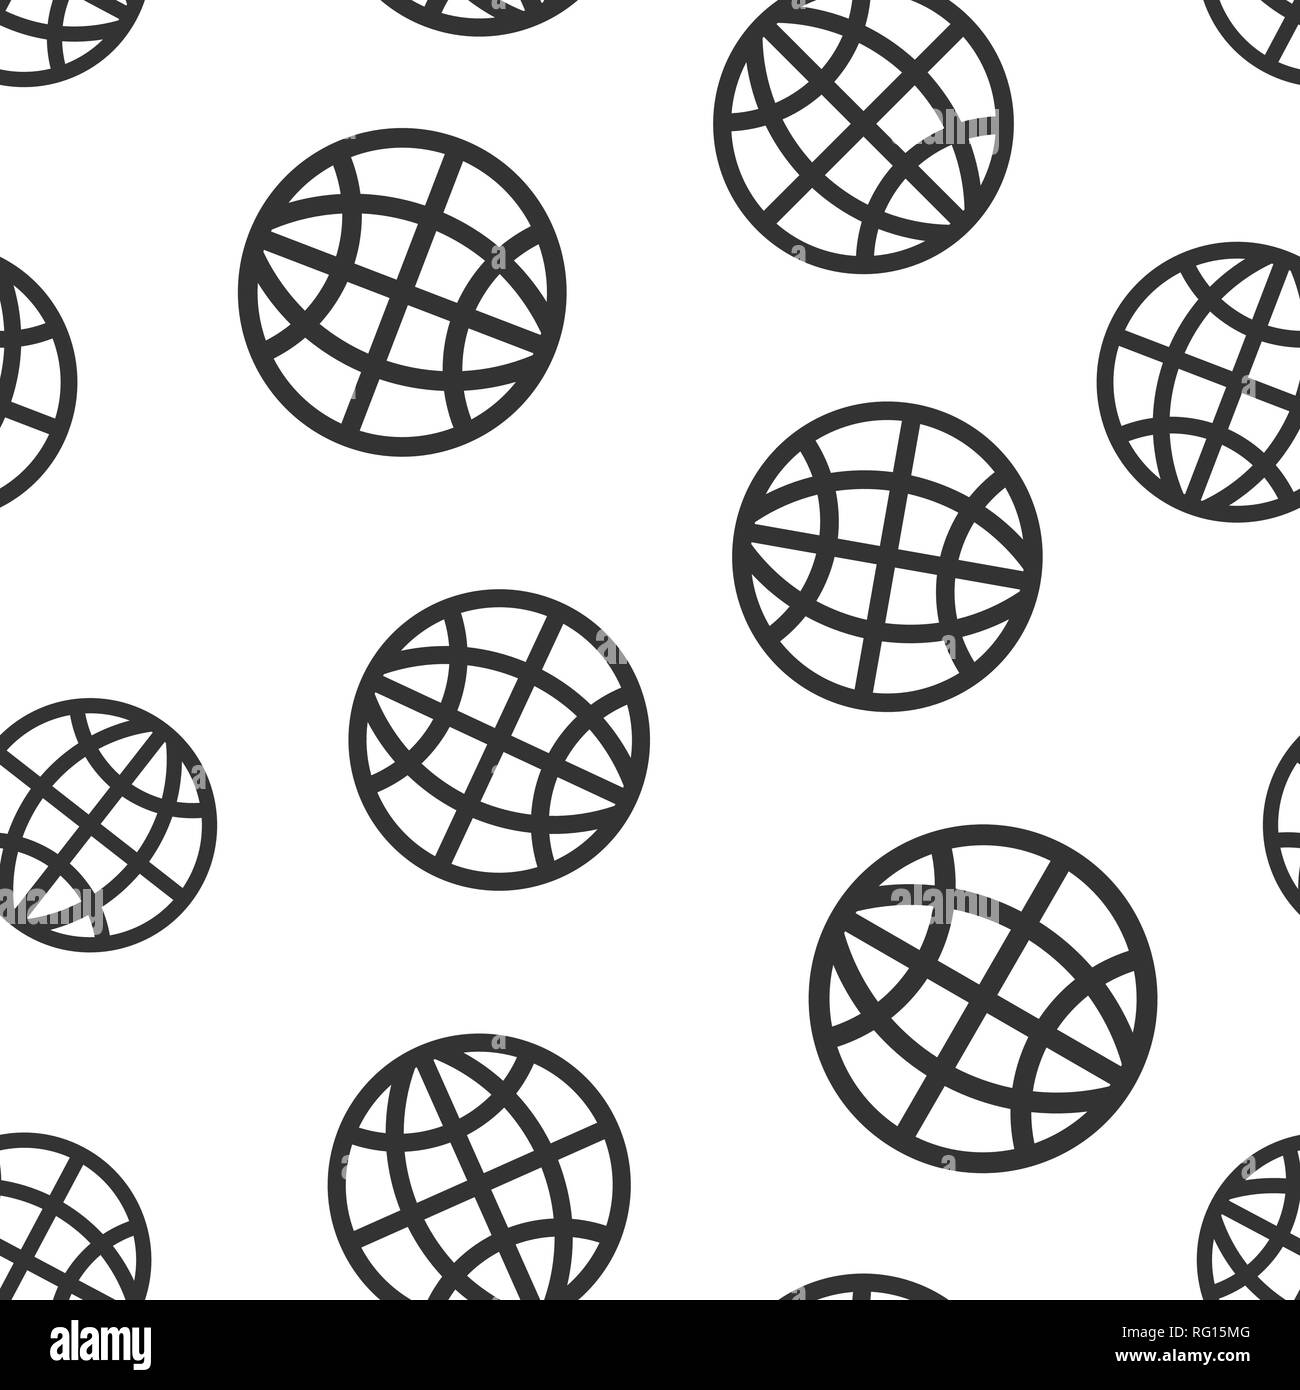 Erde - Planet Symbol nahtlose Muster Hintergrund. Globus geographische Vector Illustration. Die globale Kommunikation symbol Muster. Stock Vektor